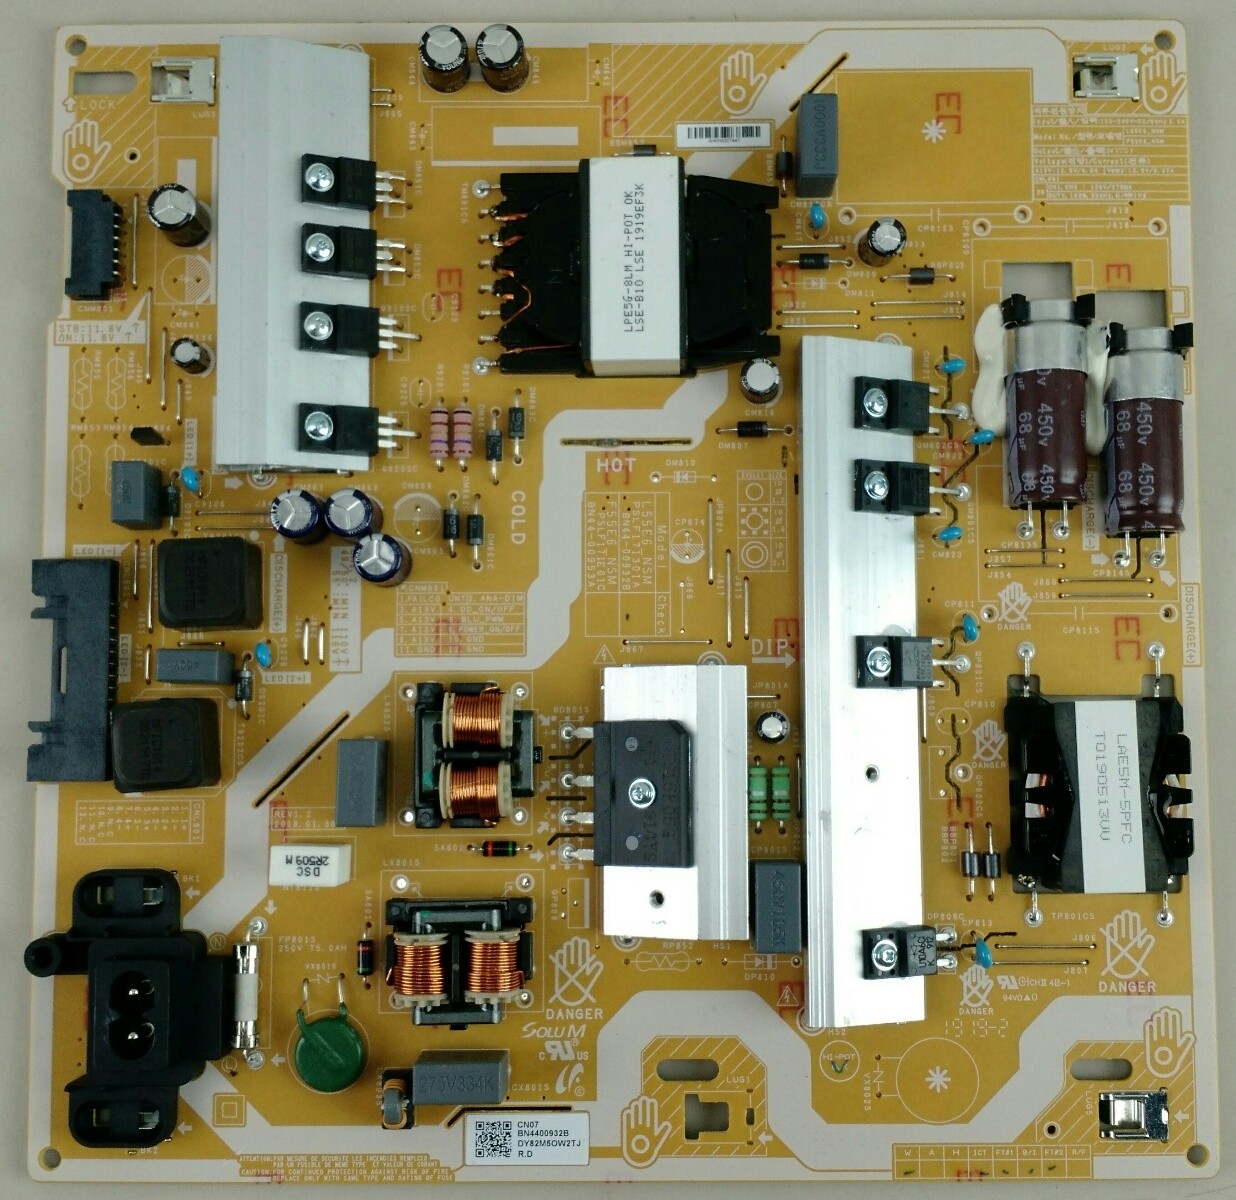 Samsung BN4400932B Power Board for UN49NU6300FXZA (FA01/UNU7300) TV 